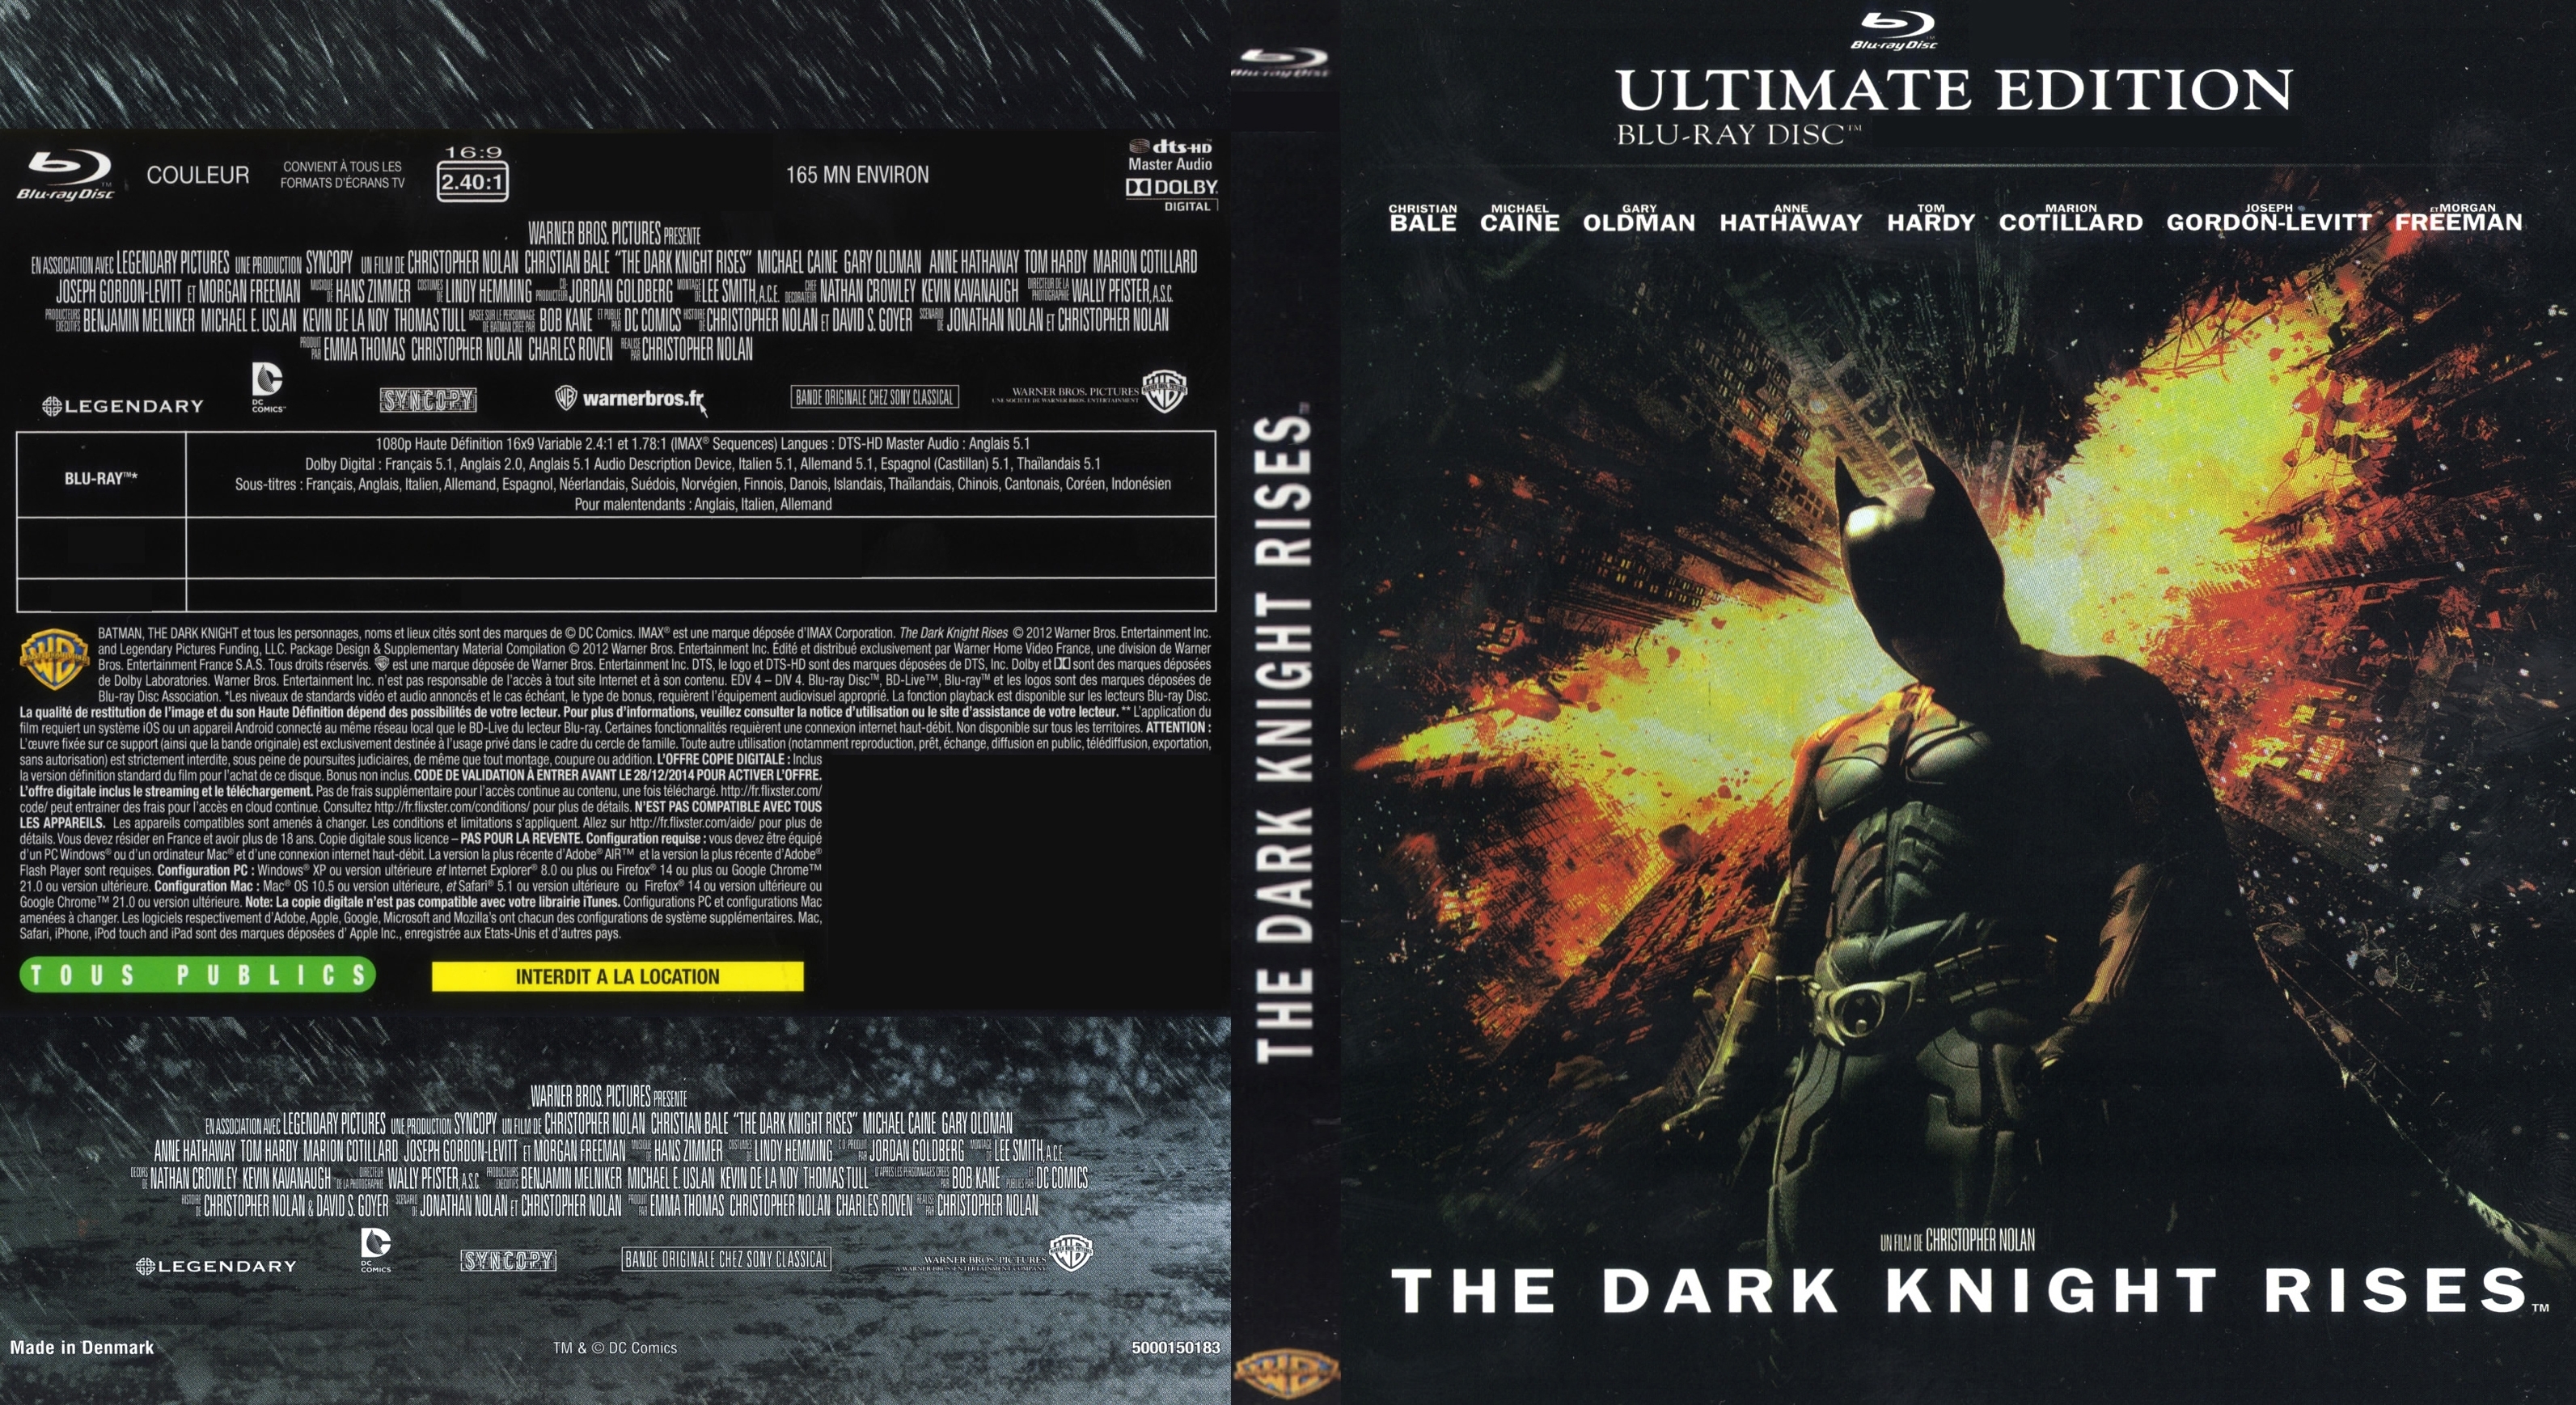 Jaquette DVD The dark knight rises custom (BLU-RAY) v3